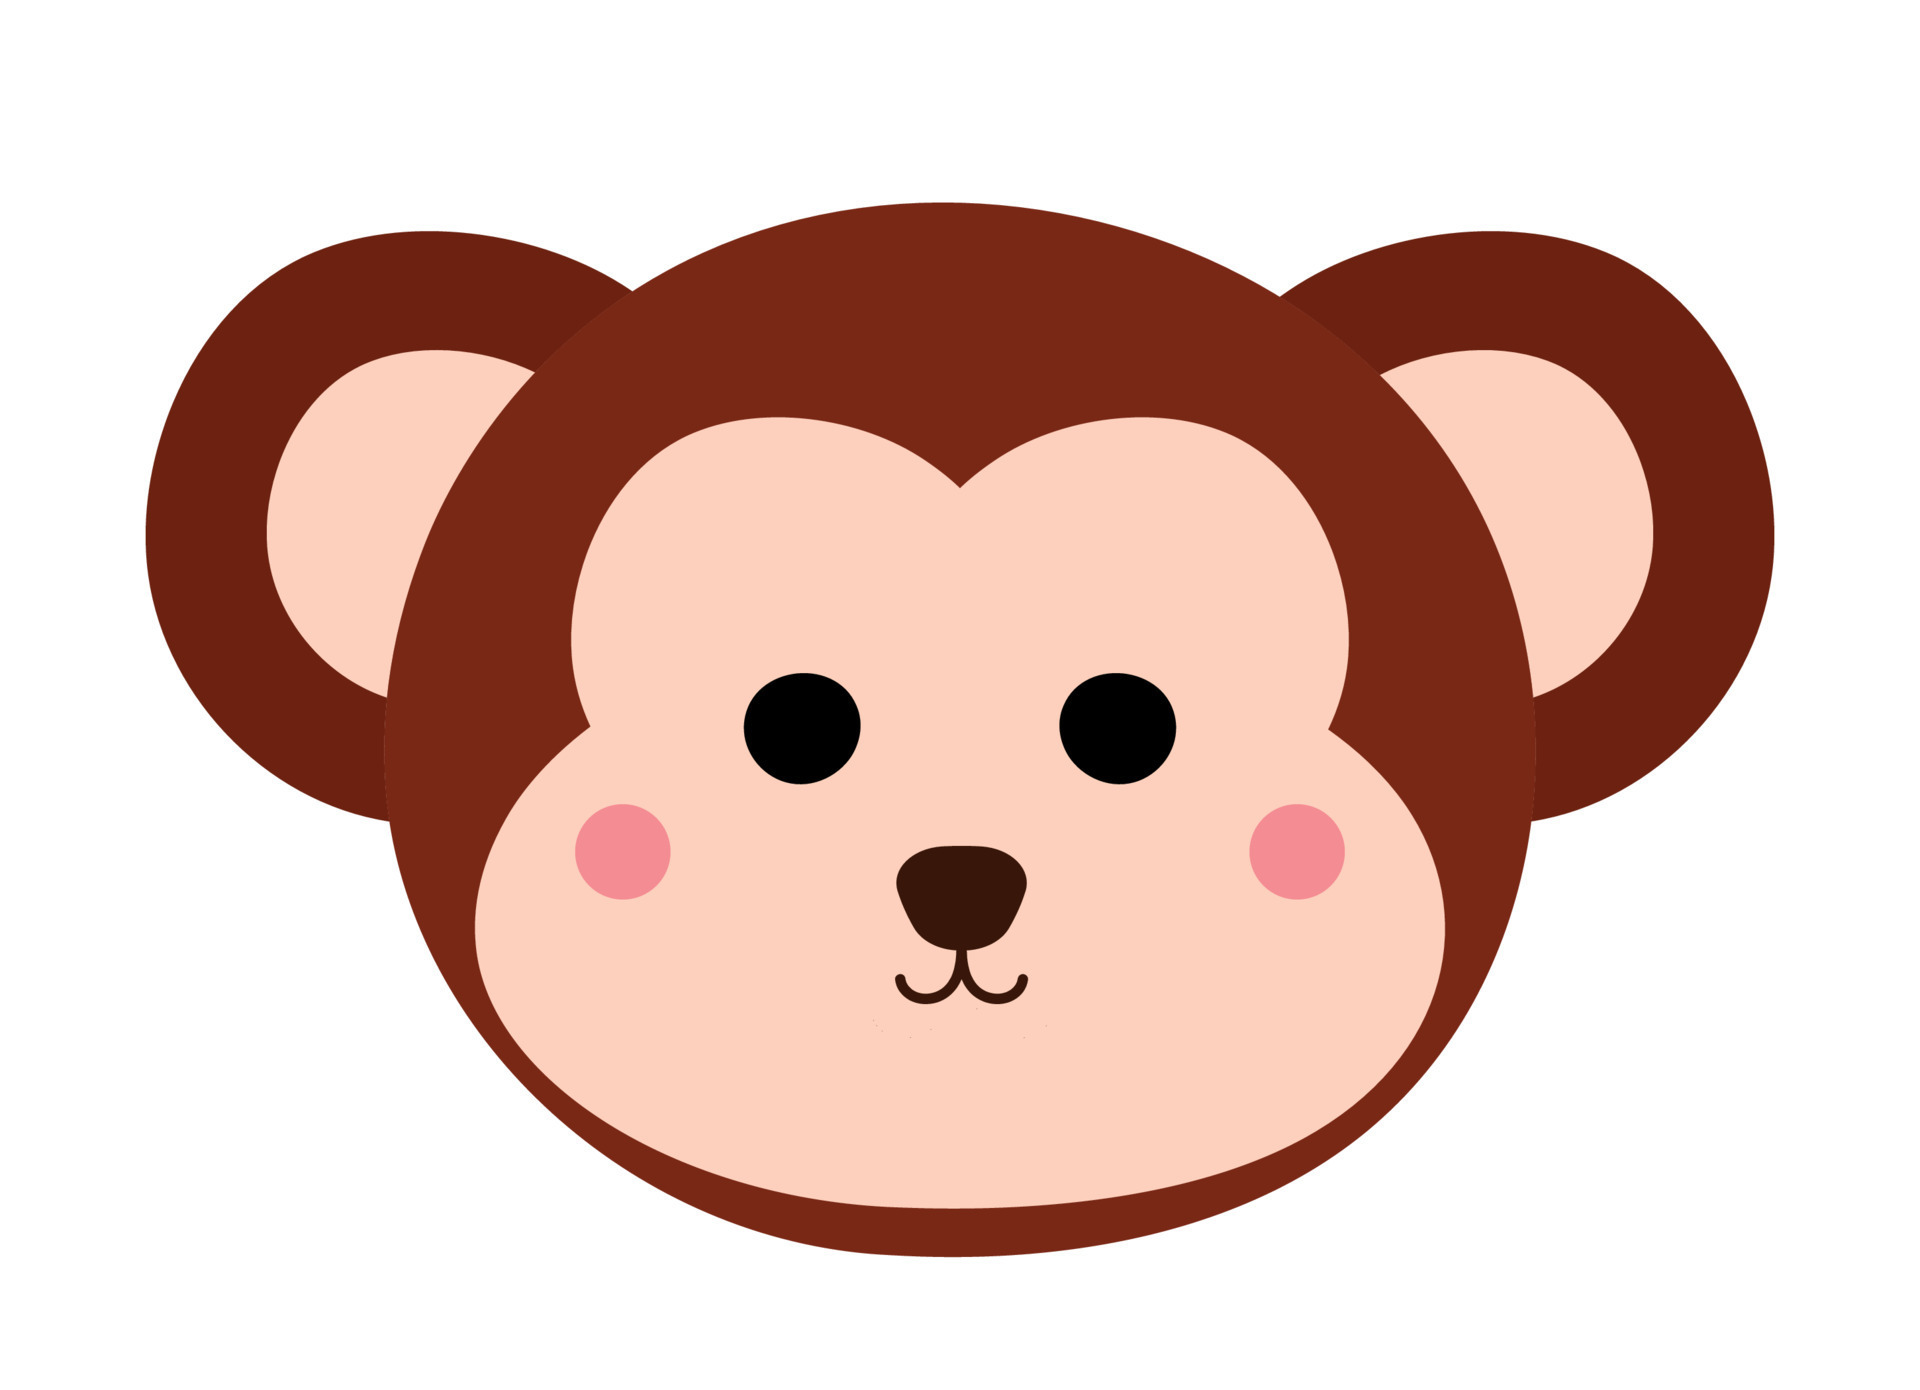 Cute Little Monkey Face Wild Animal Character in Animated Cartoon Vector  Illustration 17173047 Vector Art at Vecteezy